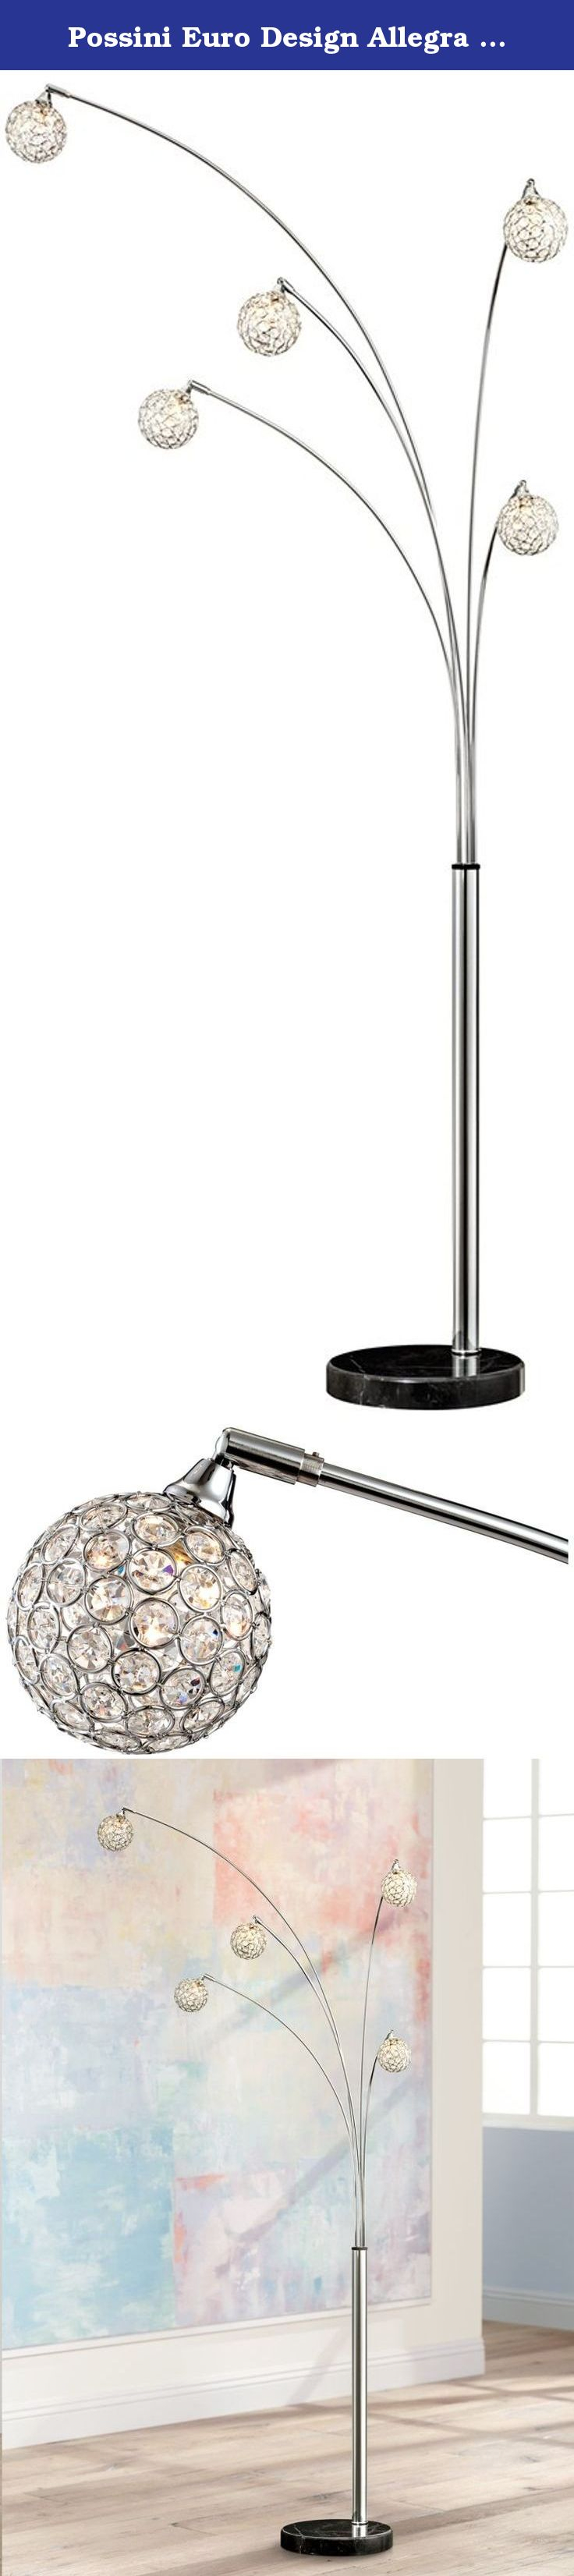 Possini Euro Design Allegra Crystal Ball Arc Floor Lamp A in size 736 X 3303